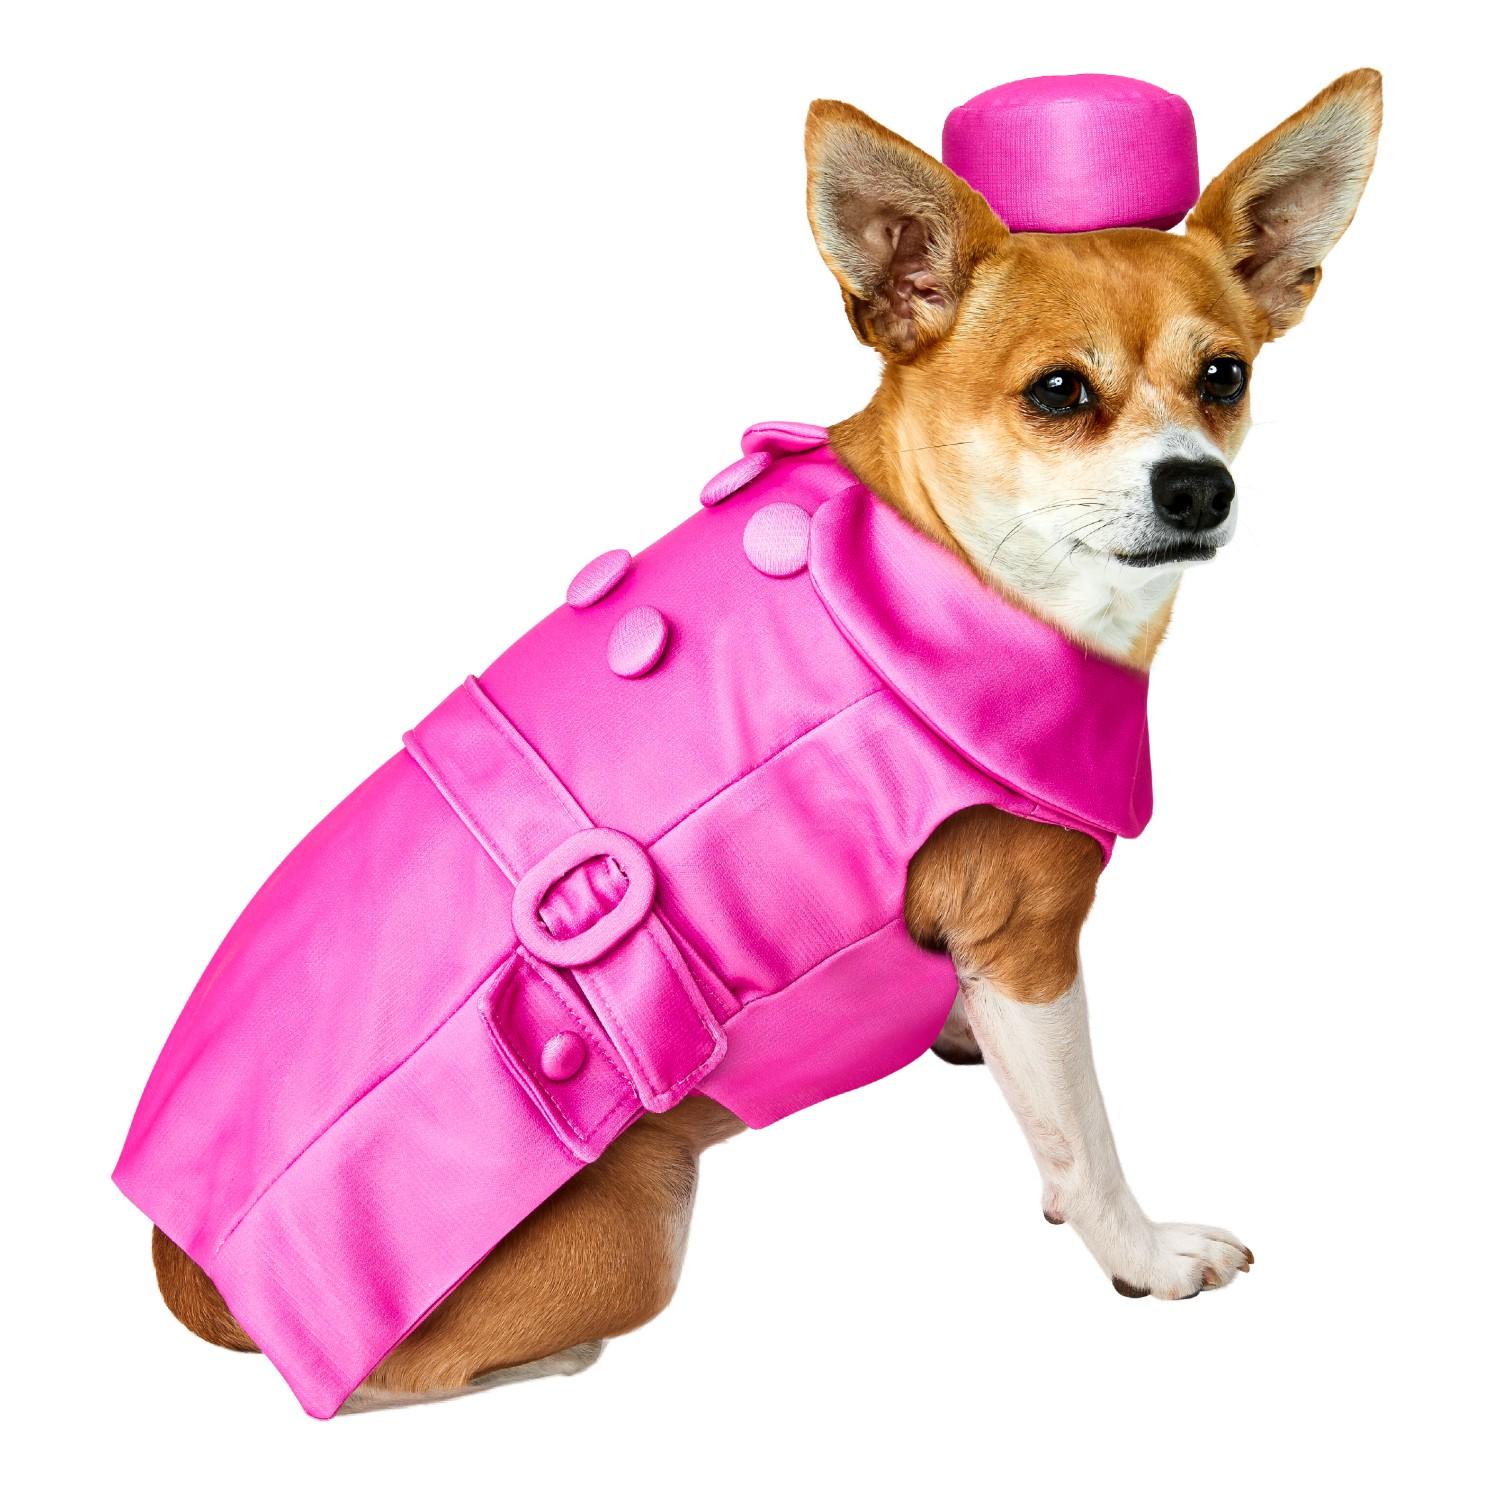 Rubies Legally Blonde Bruiser Woods Dog Costume - Pink